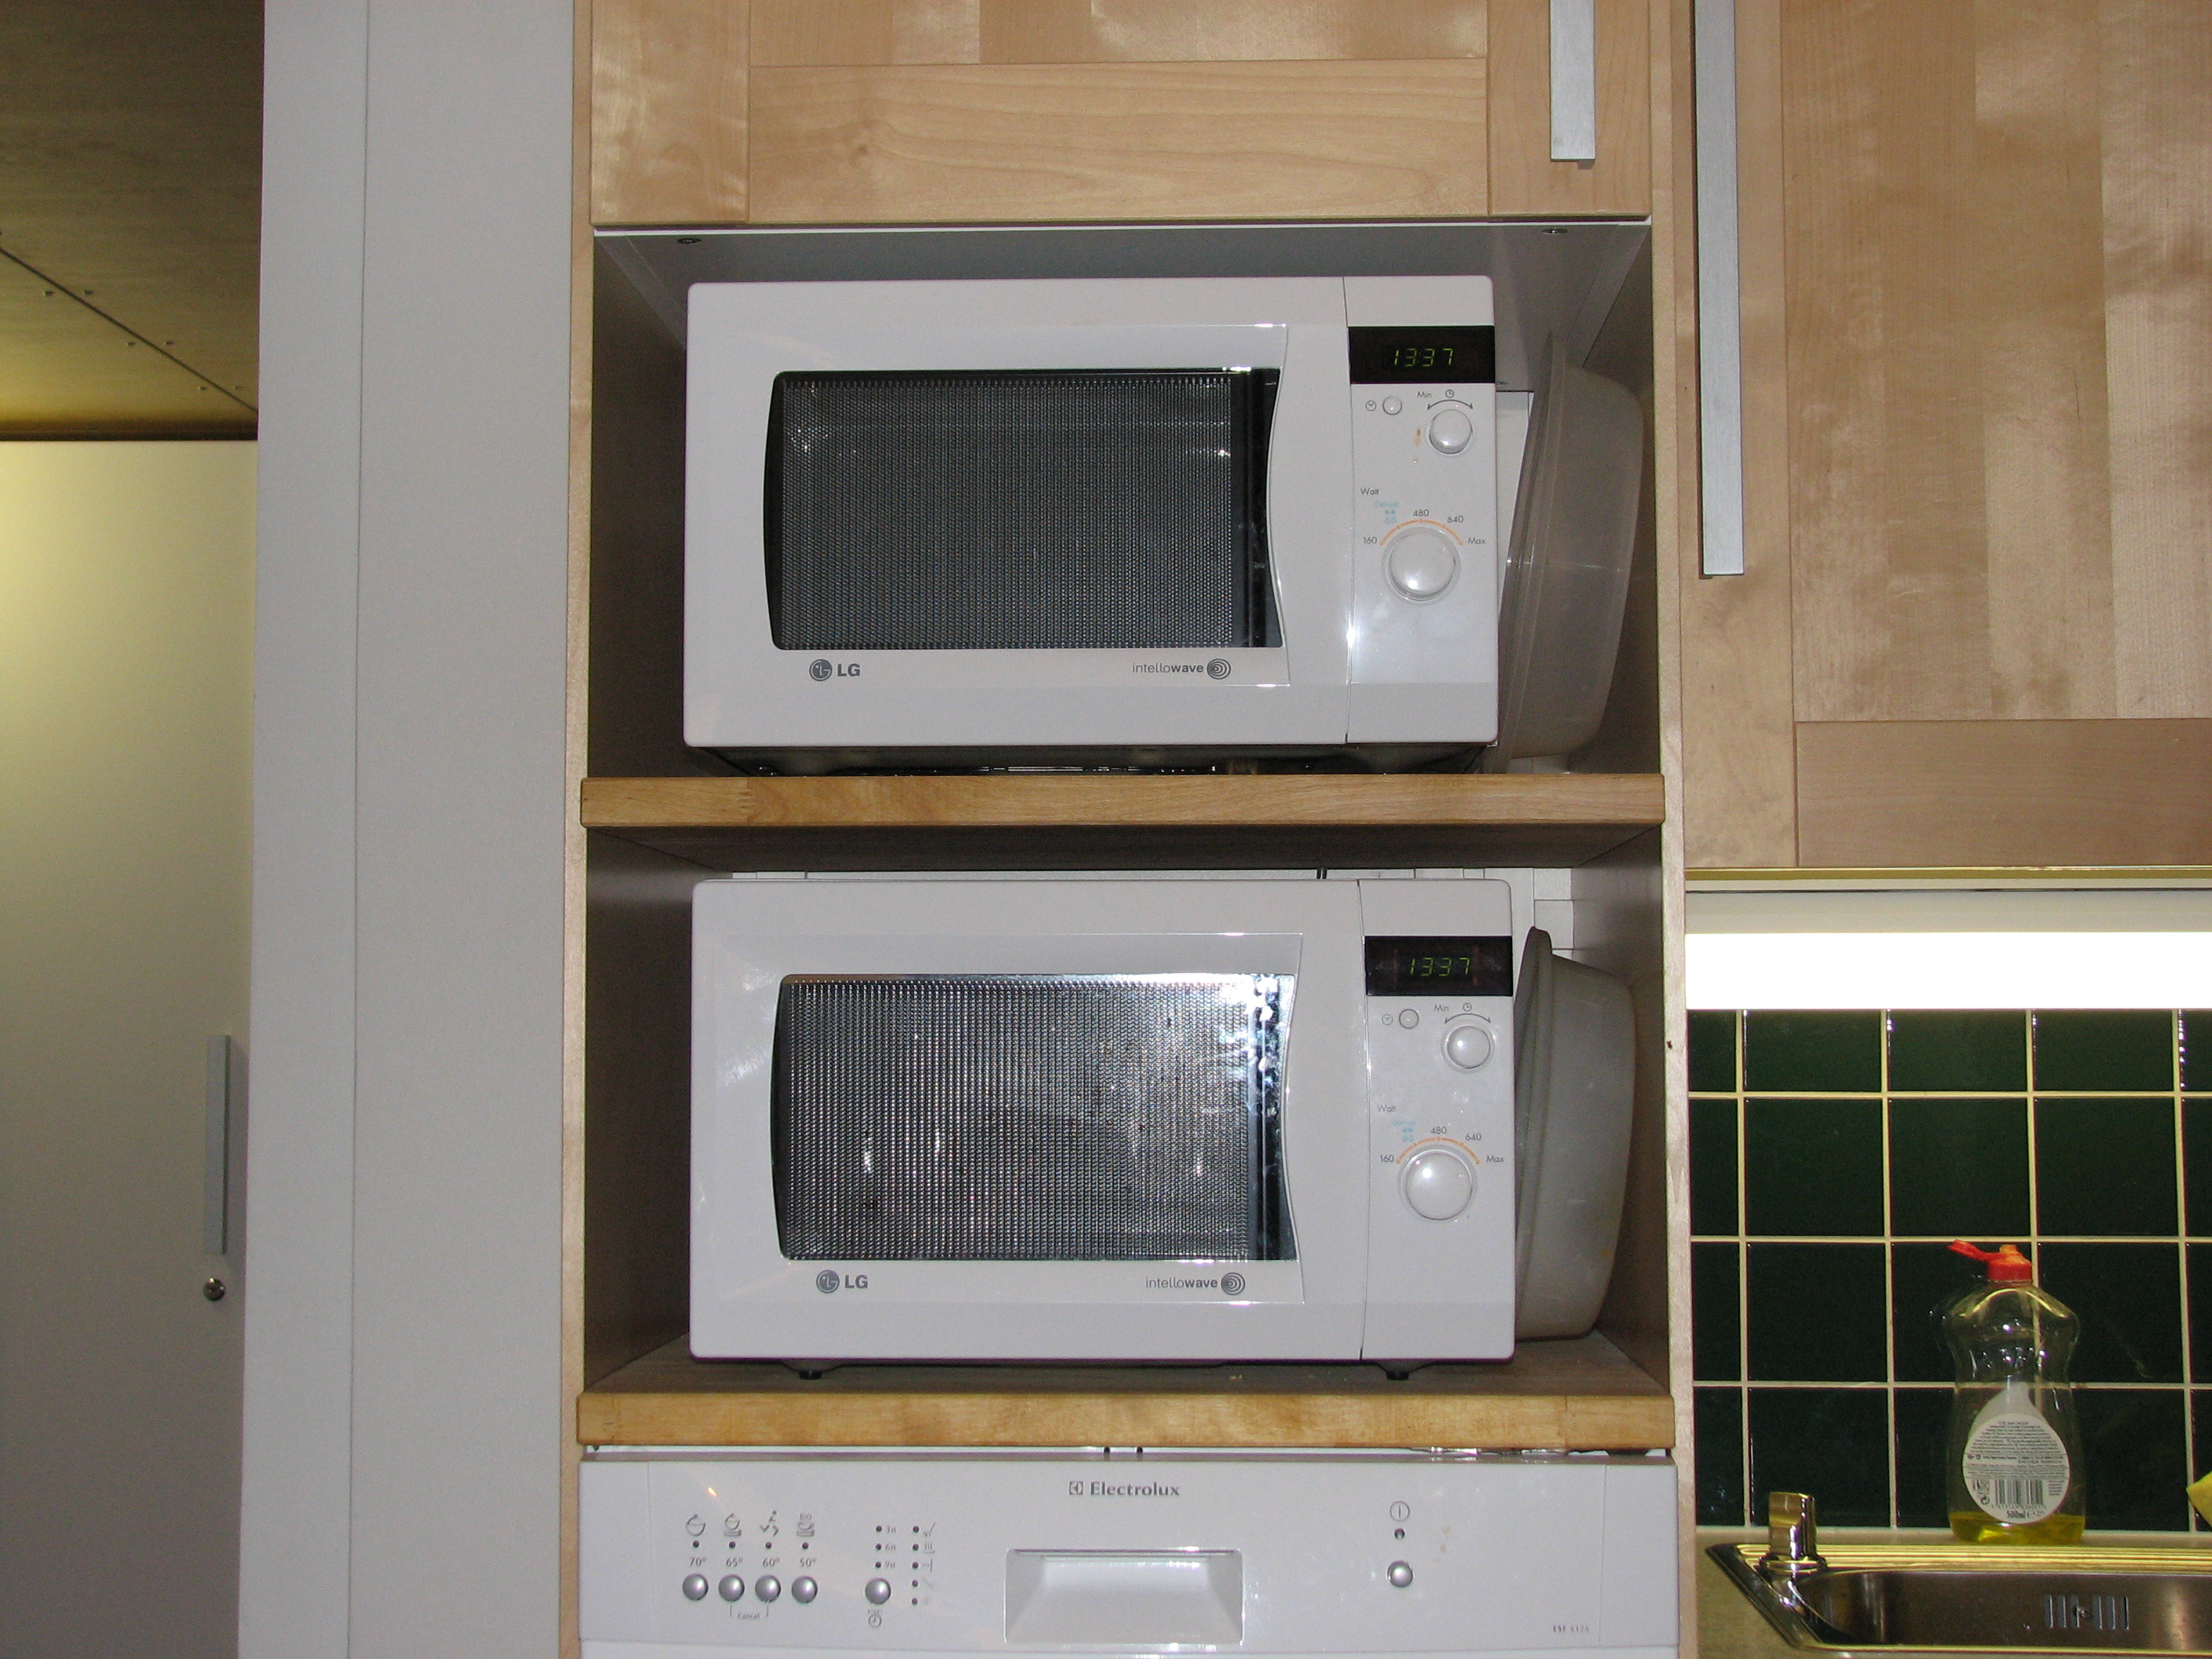 https://upload.wikimedia.org/wikipedia/commons/9/98/Leet_microwave_ovens.jpg